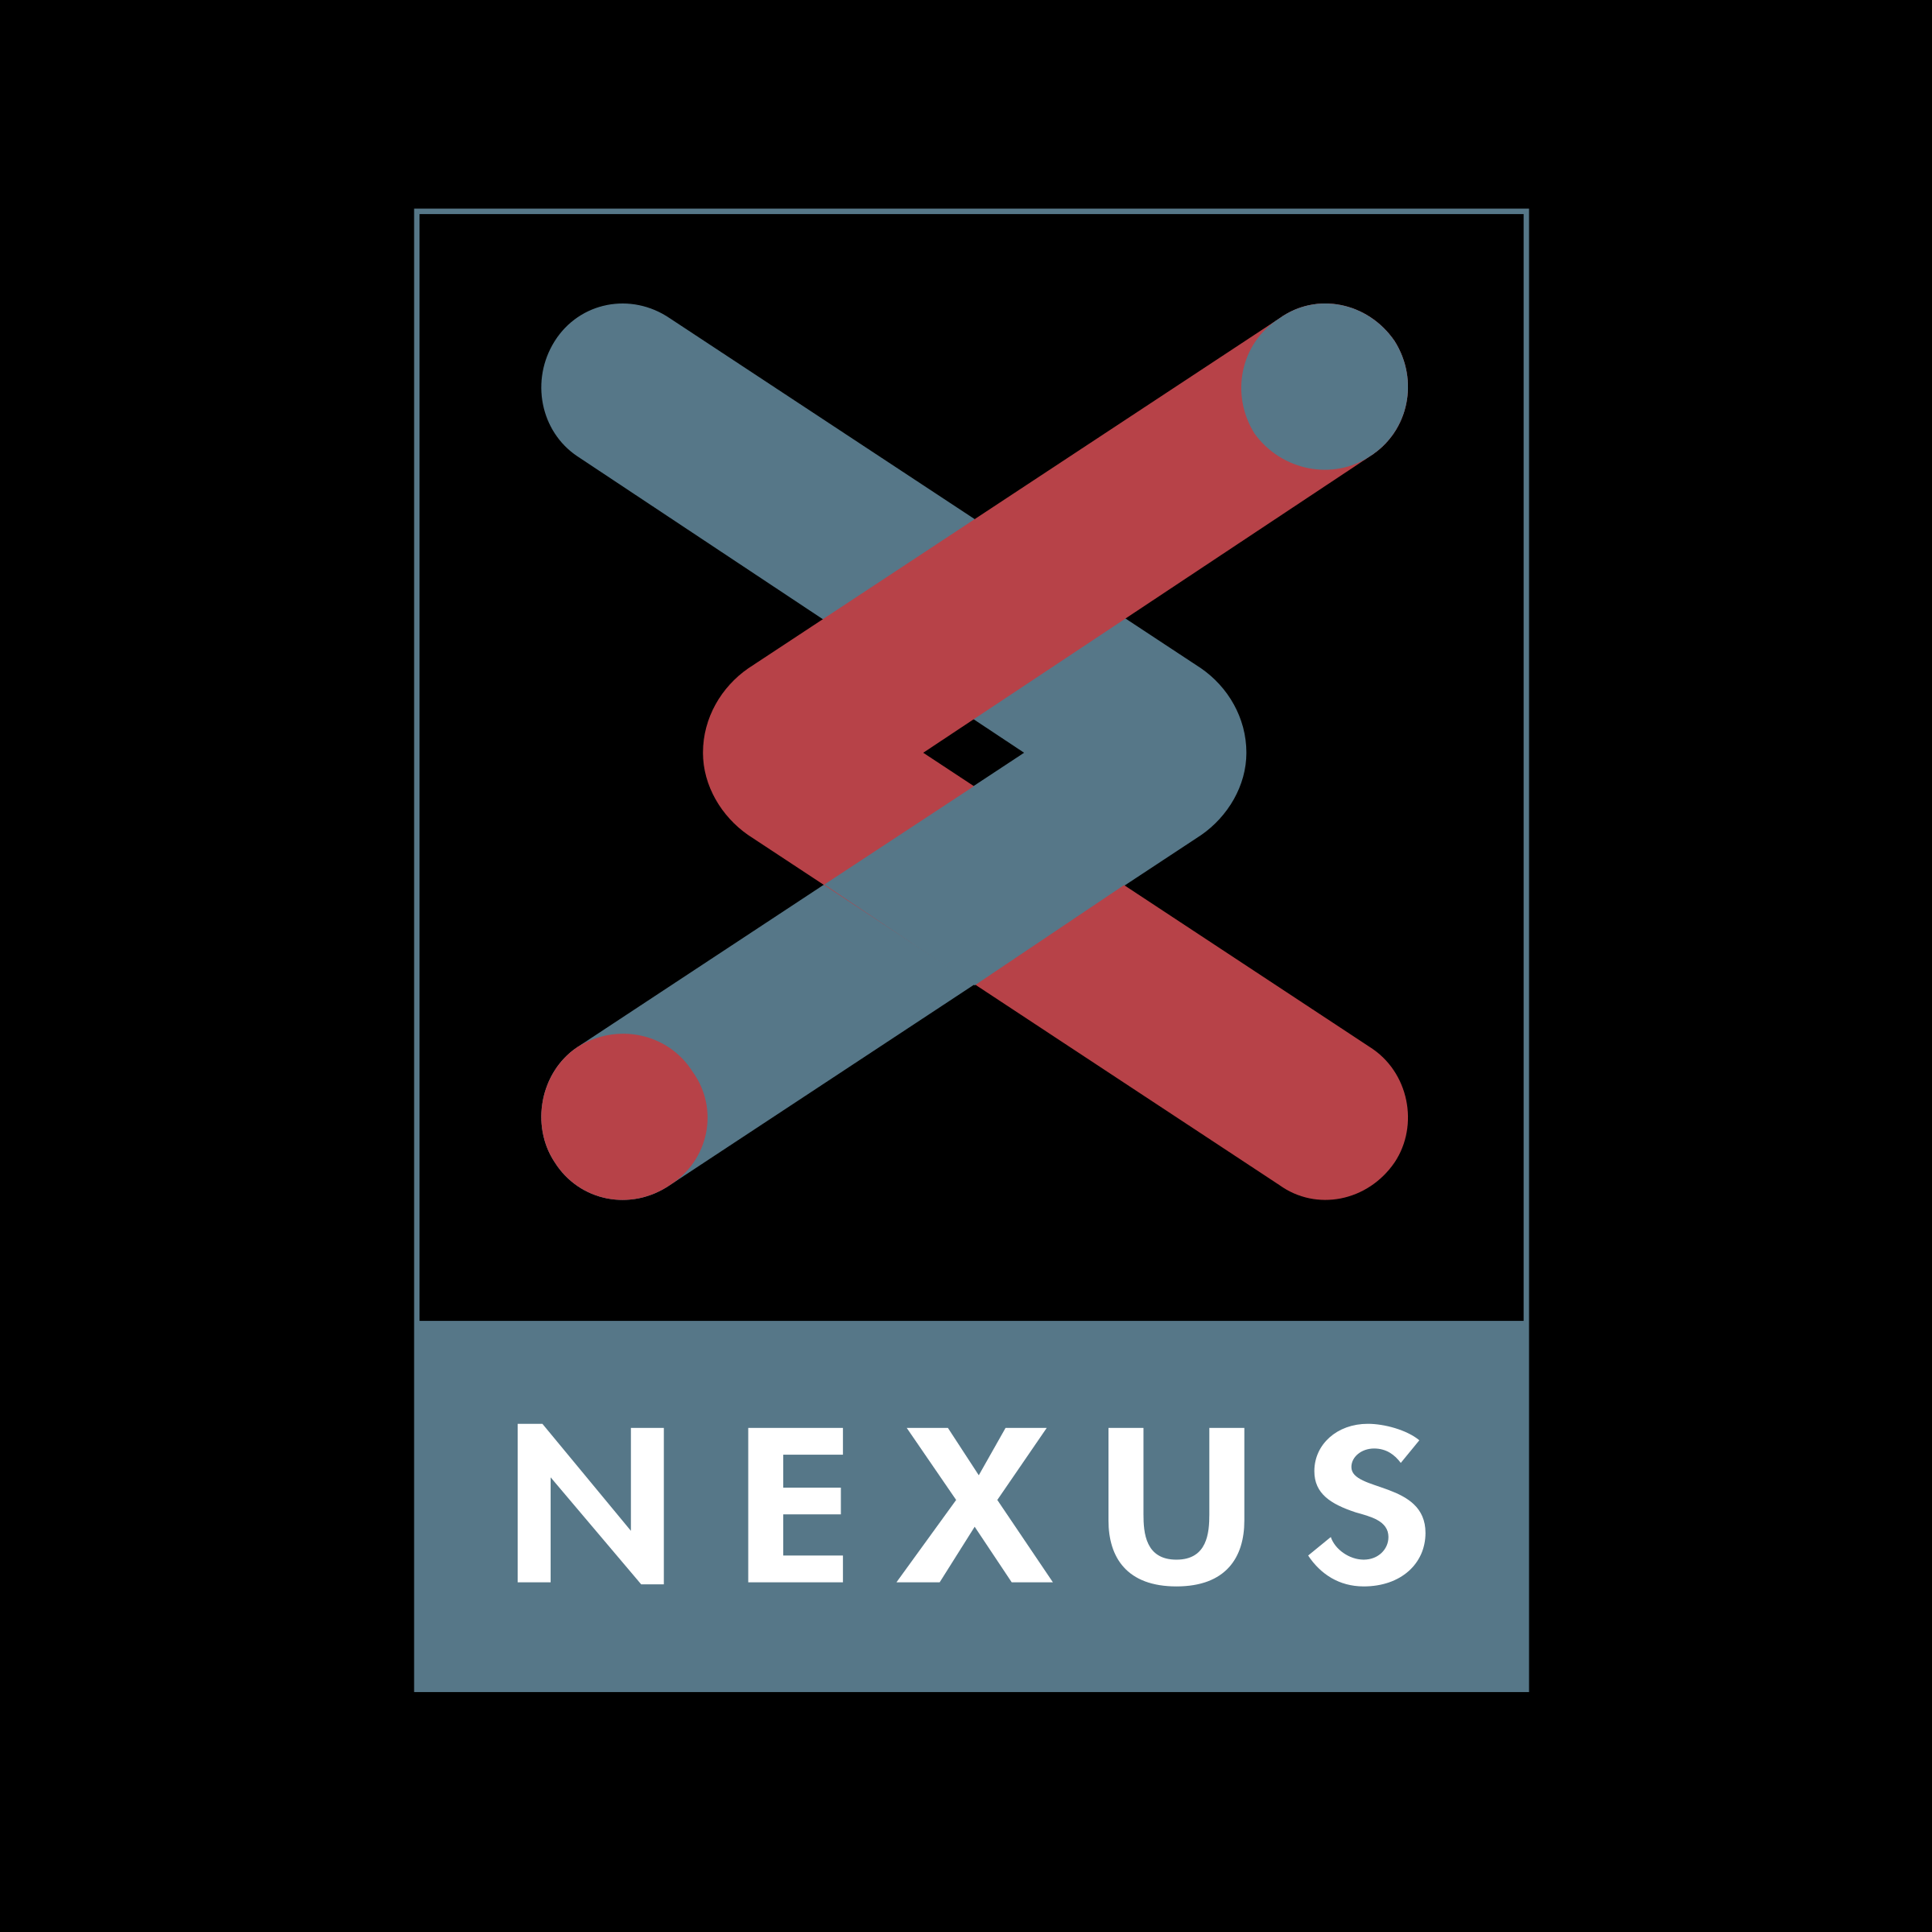 Nexus Logo - Nexus Logo PNG Transparent & SVG Vector - Freebie Supply